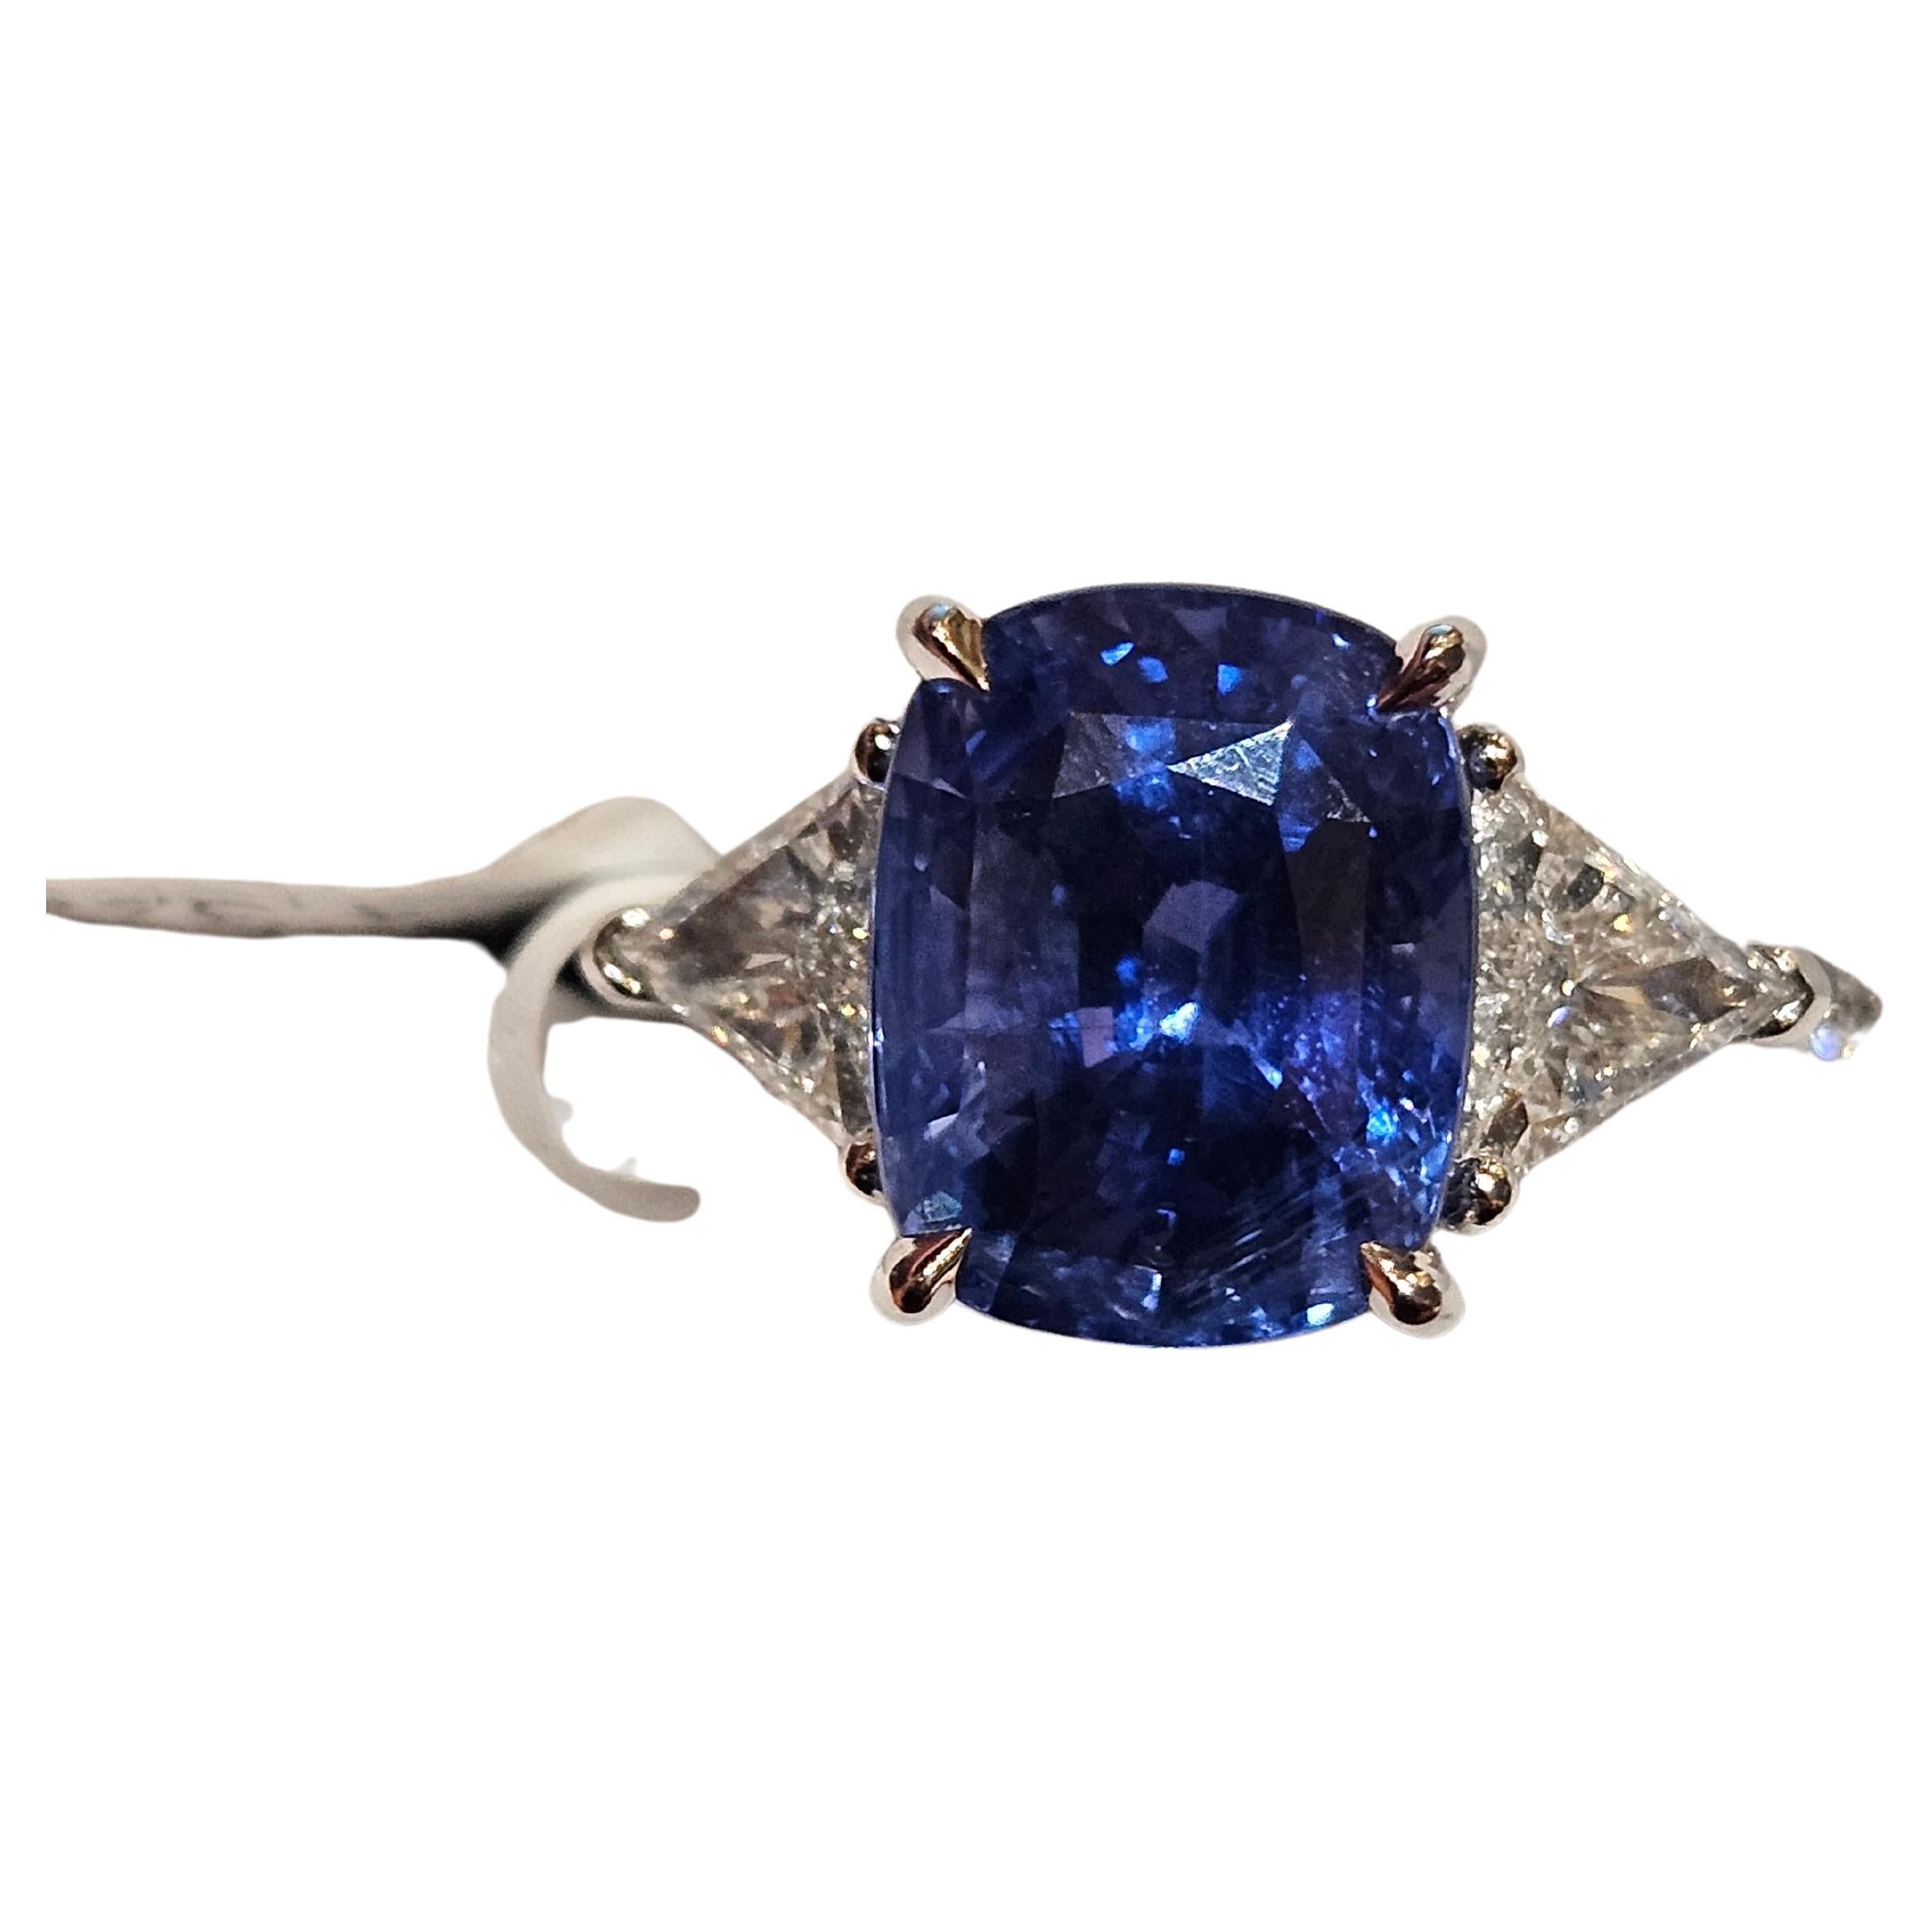 NWT $132, 200 Or 18KT Gorgeous Nature Large Ceylon Blue Sapphire Diamond Ring